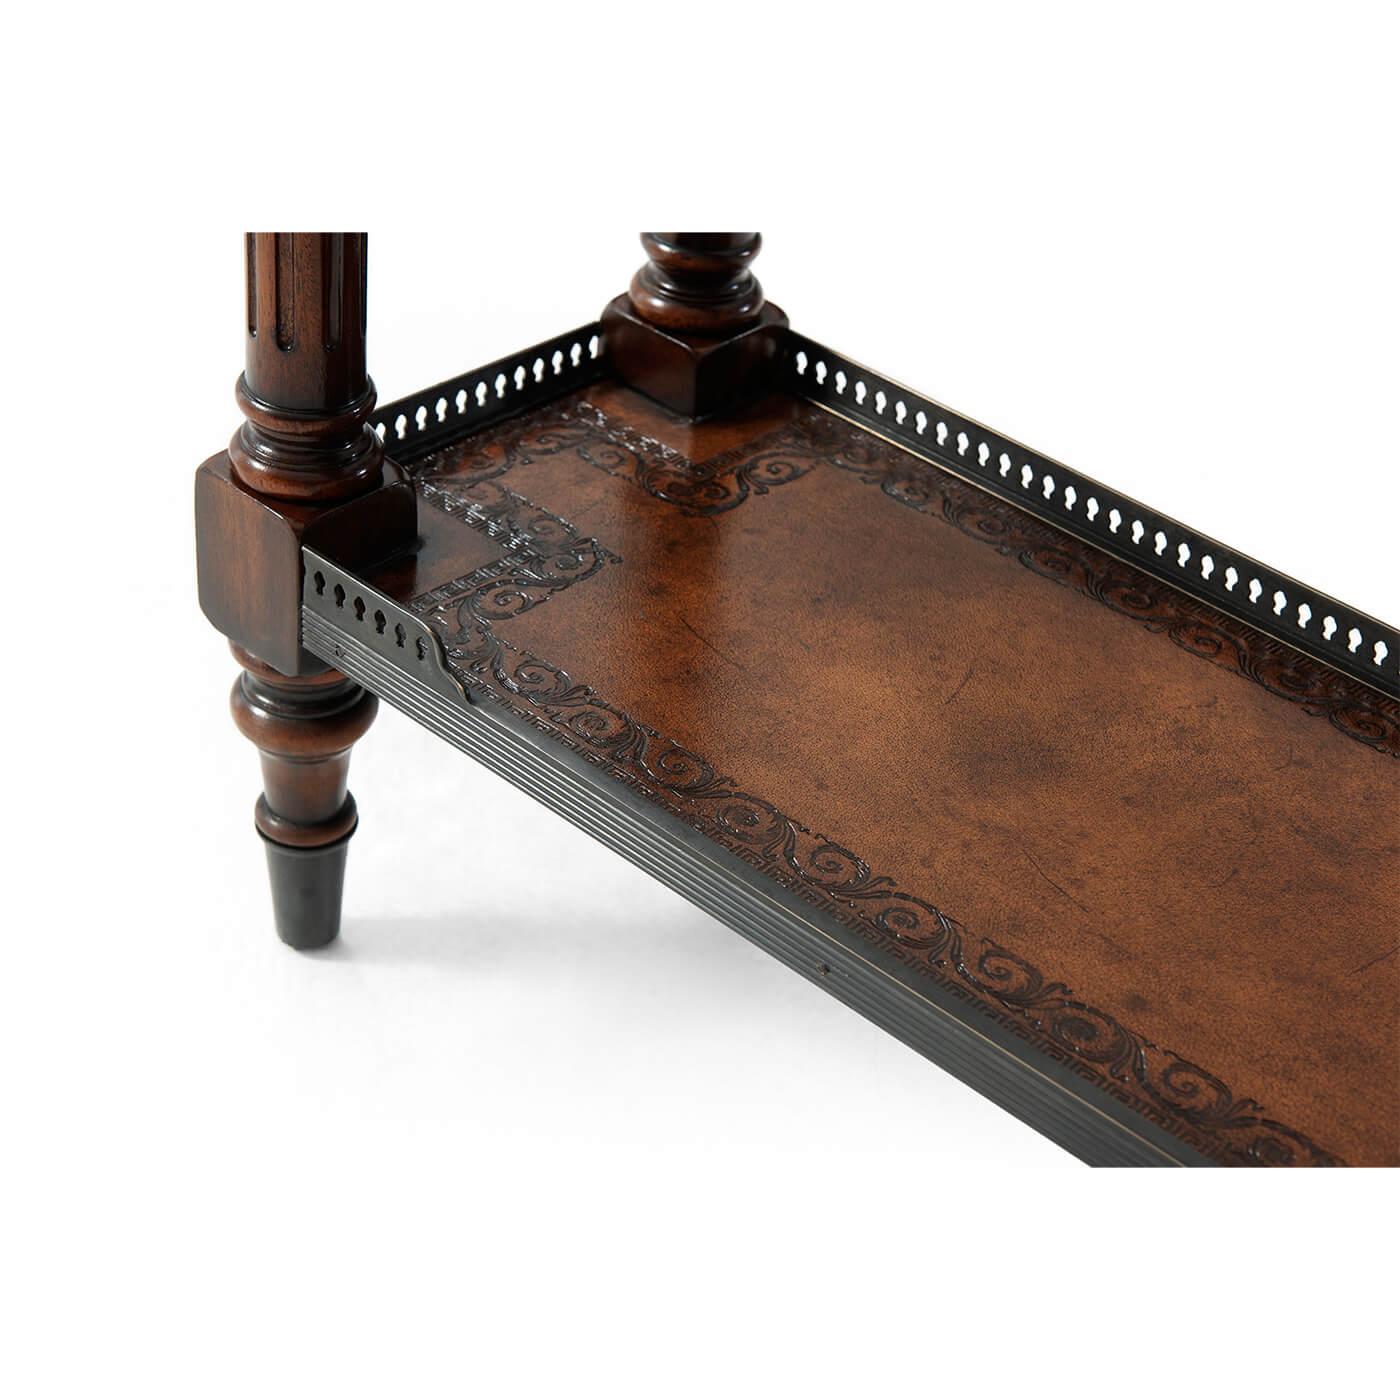 narrow antique console table